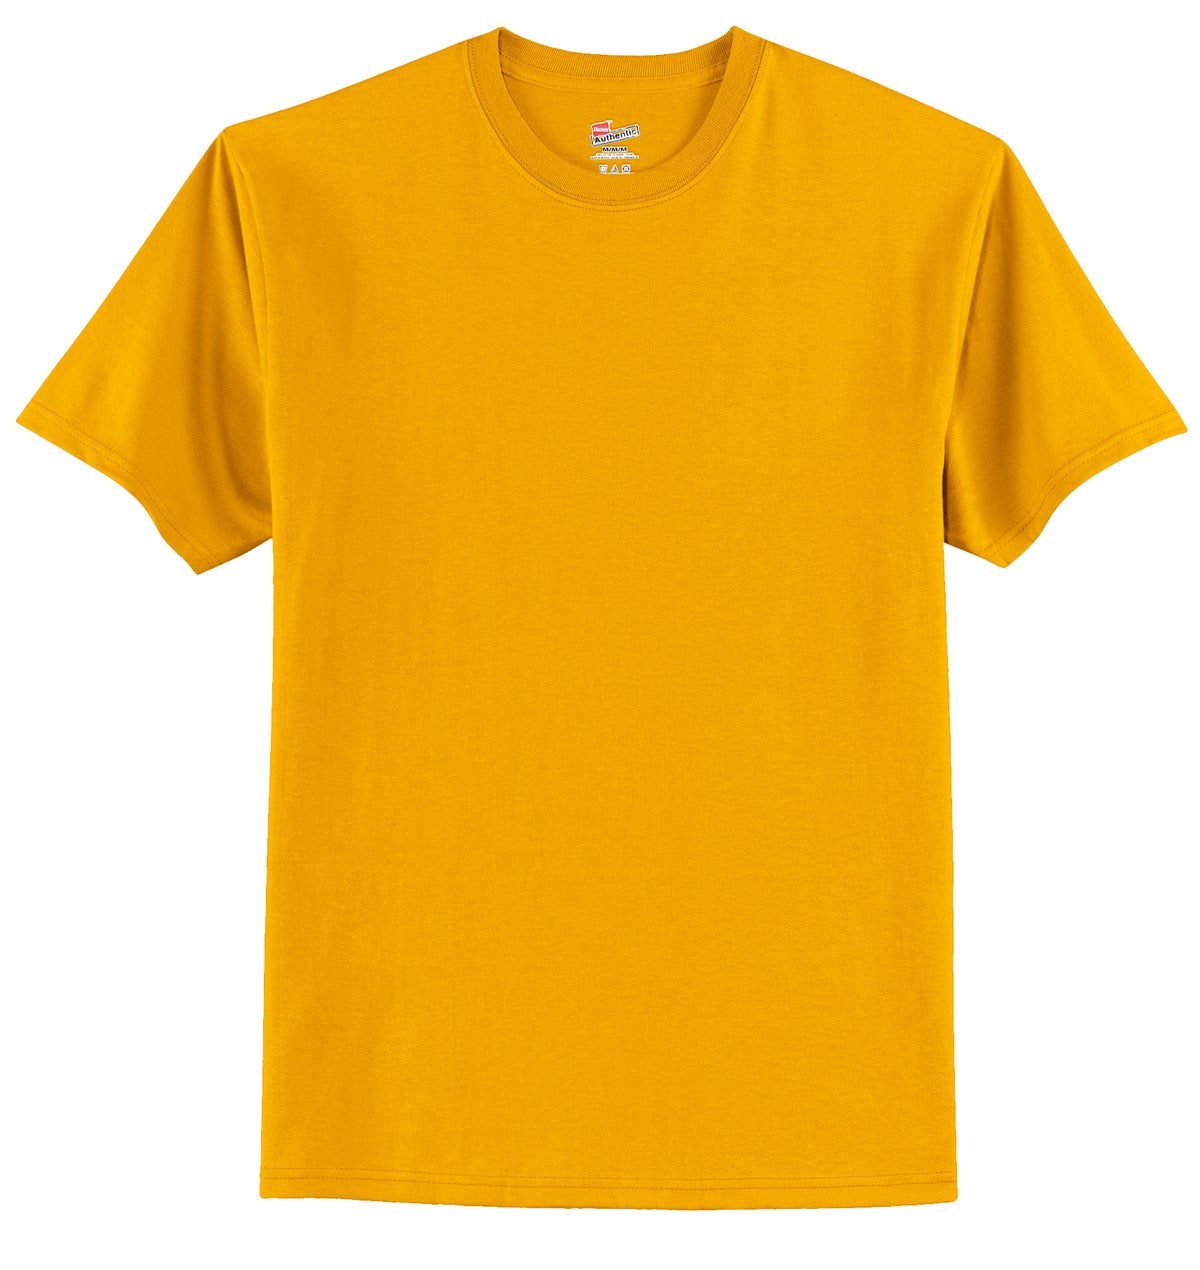 6-6.1 100% Cotton T-Shirts